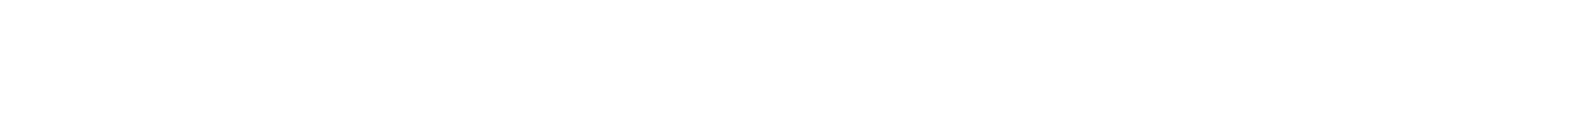 Swiss Prime Site Logo groß für dunkle Hintergründe (transparentes PNG)